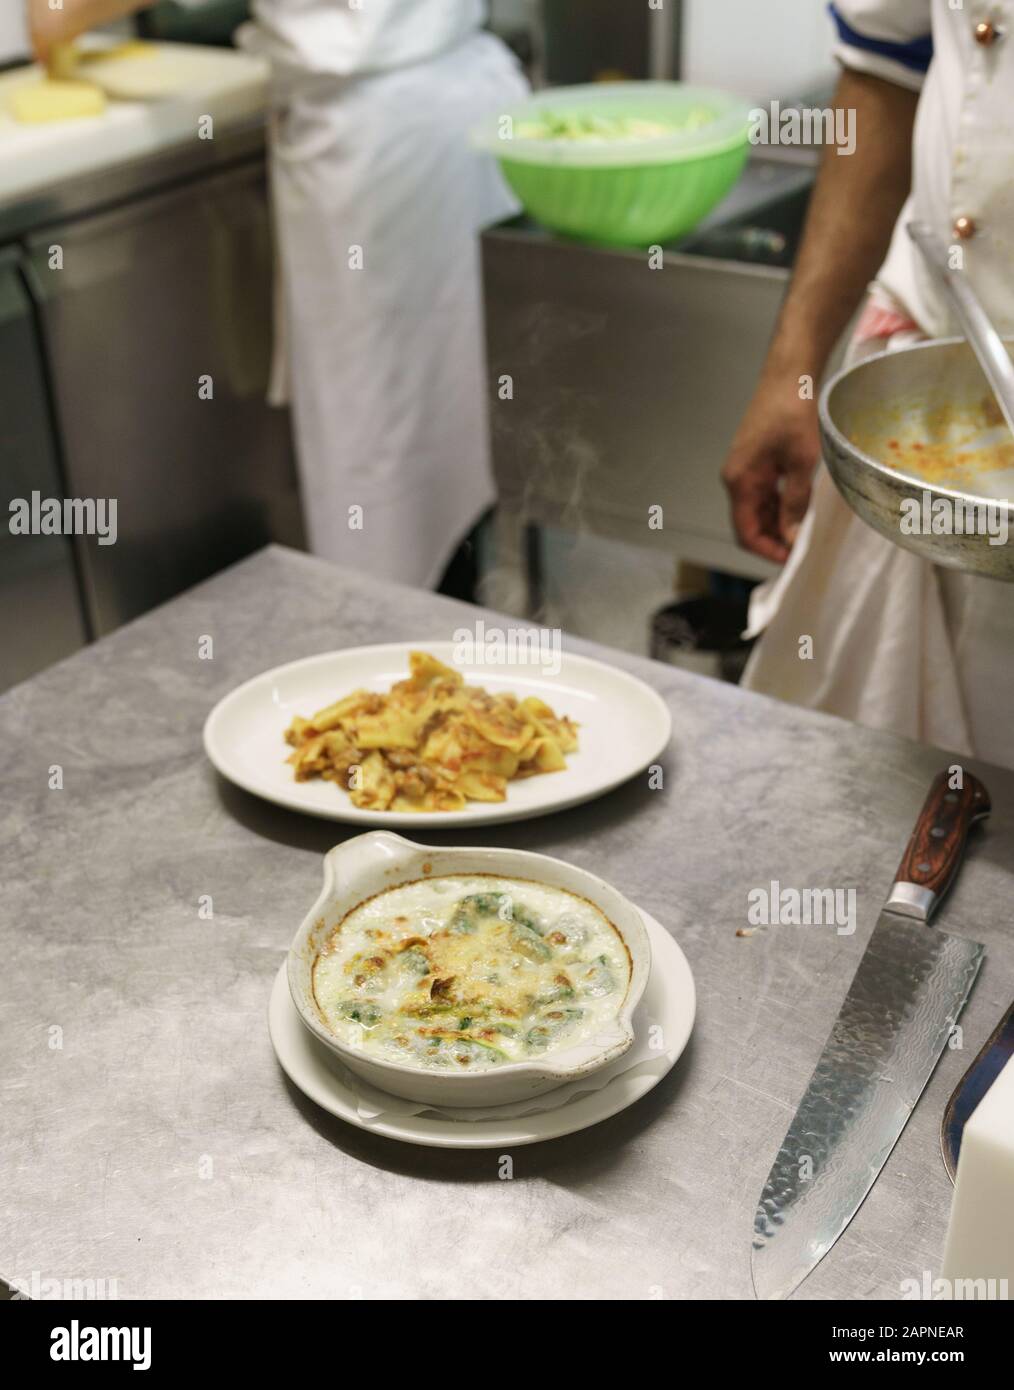 Italian plate of food Stock Photo